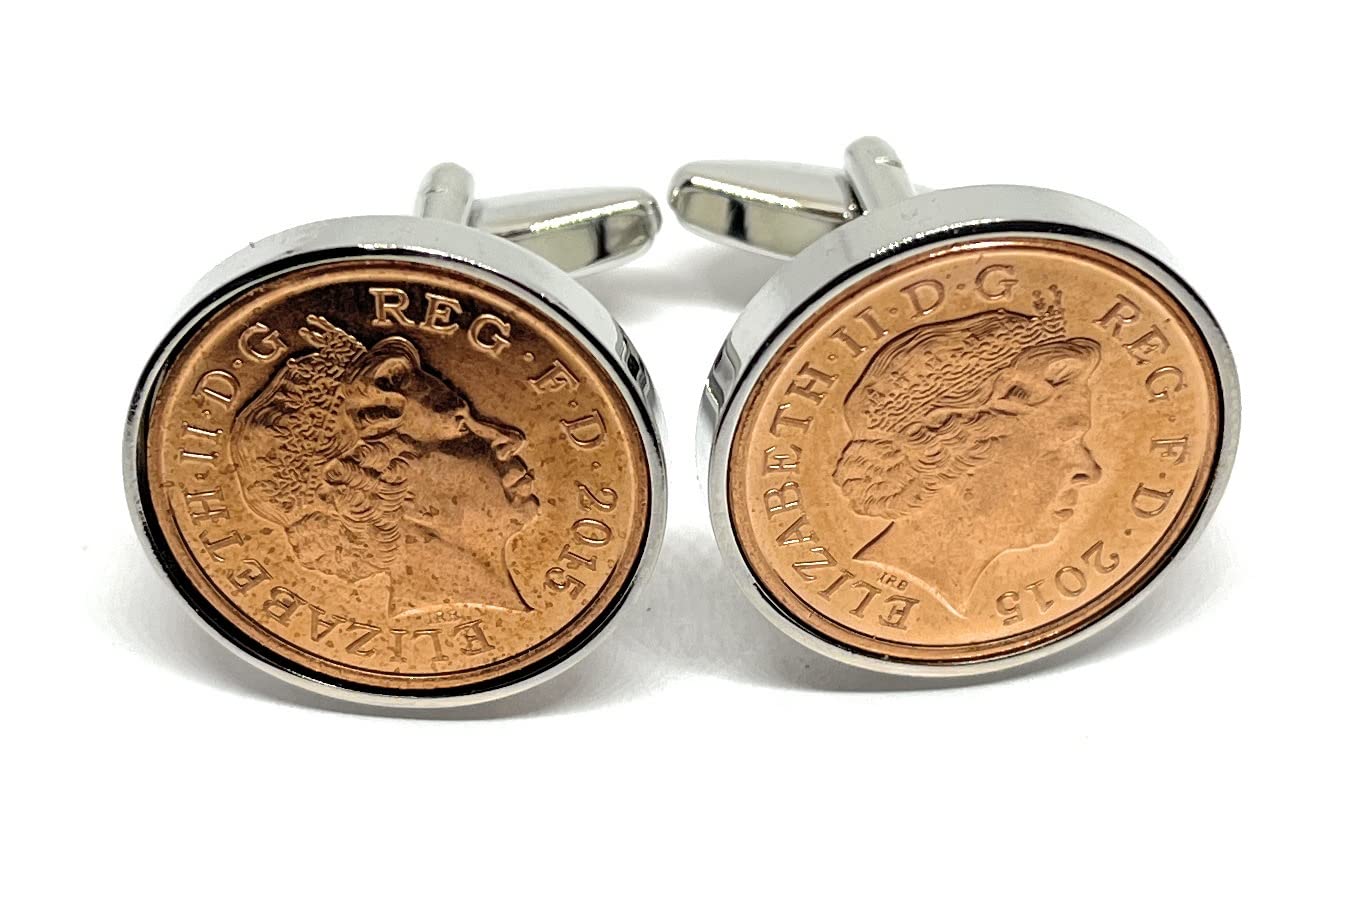 Premium 2015 7th Copper wedding Anniversary 6 year Copper birthday / Anniversary 2015 Coin cufflinks